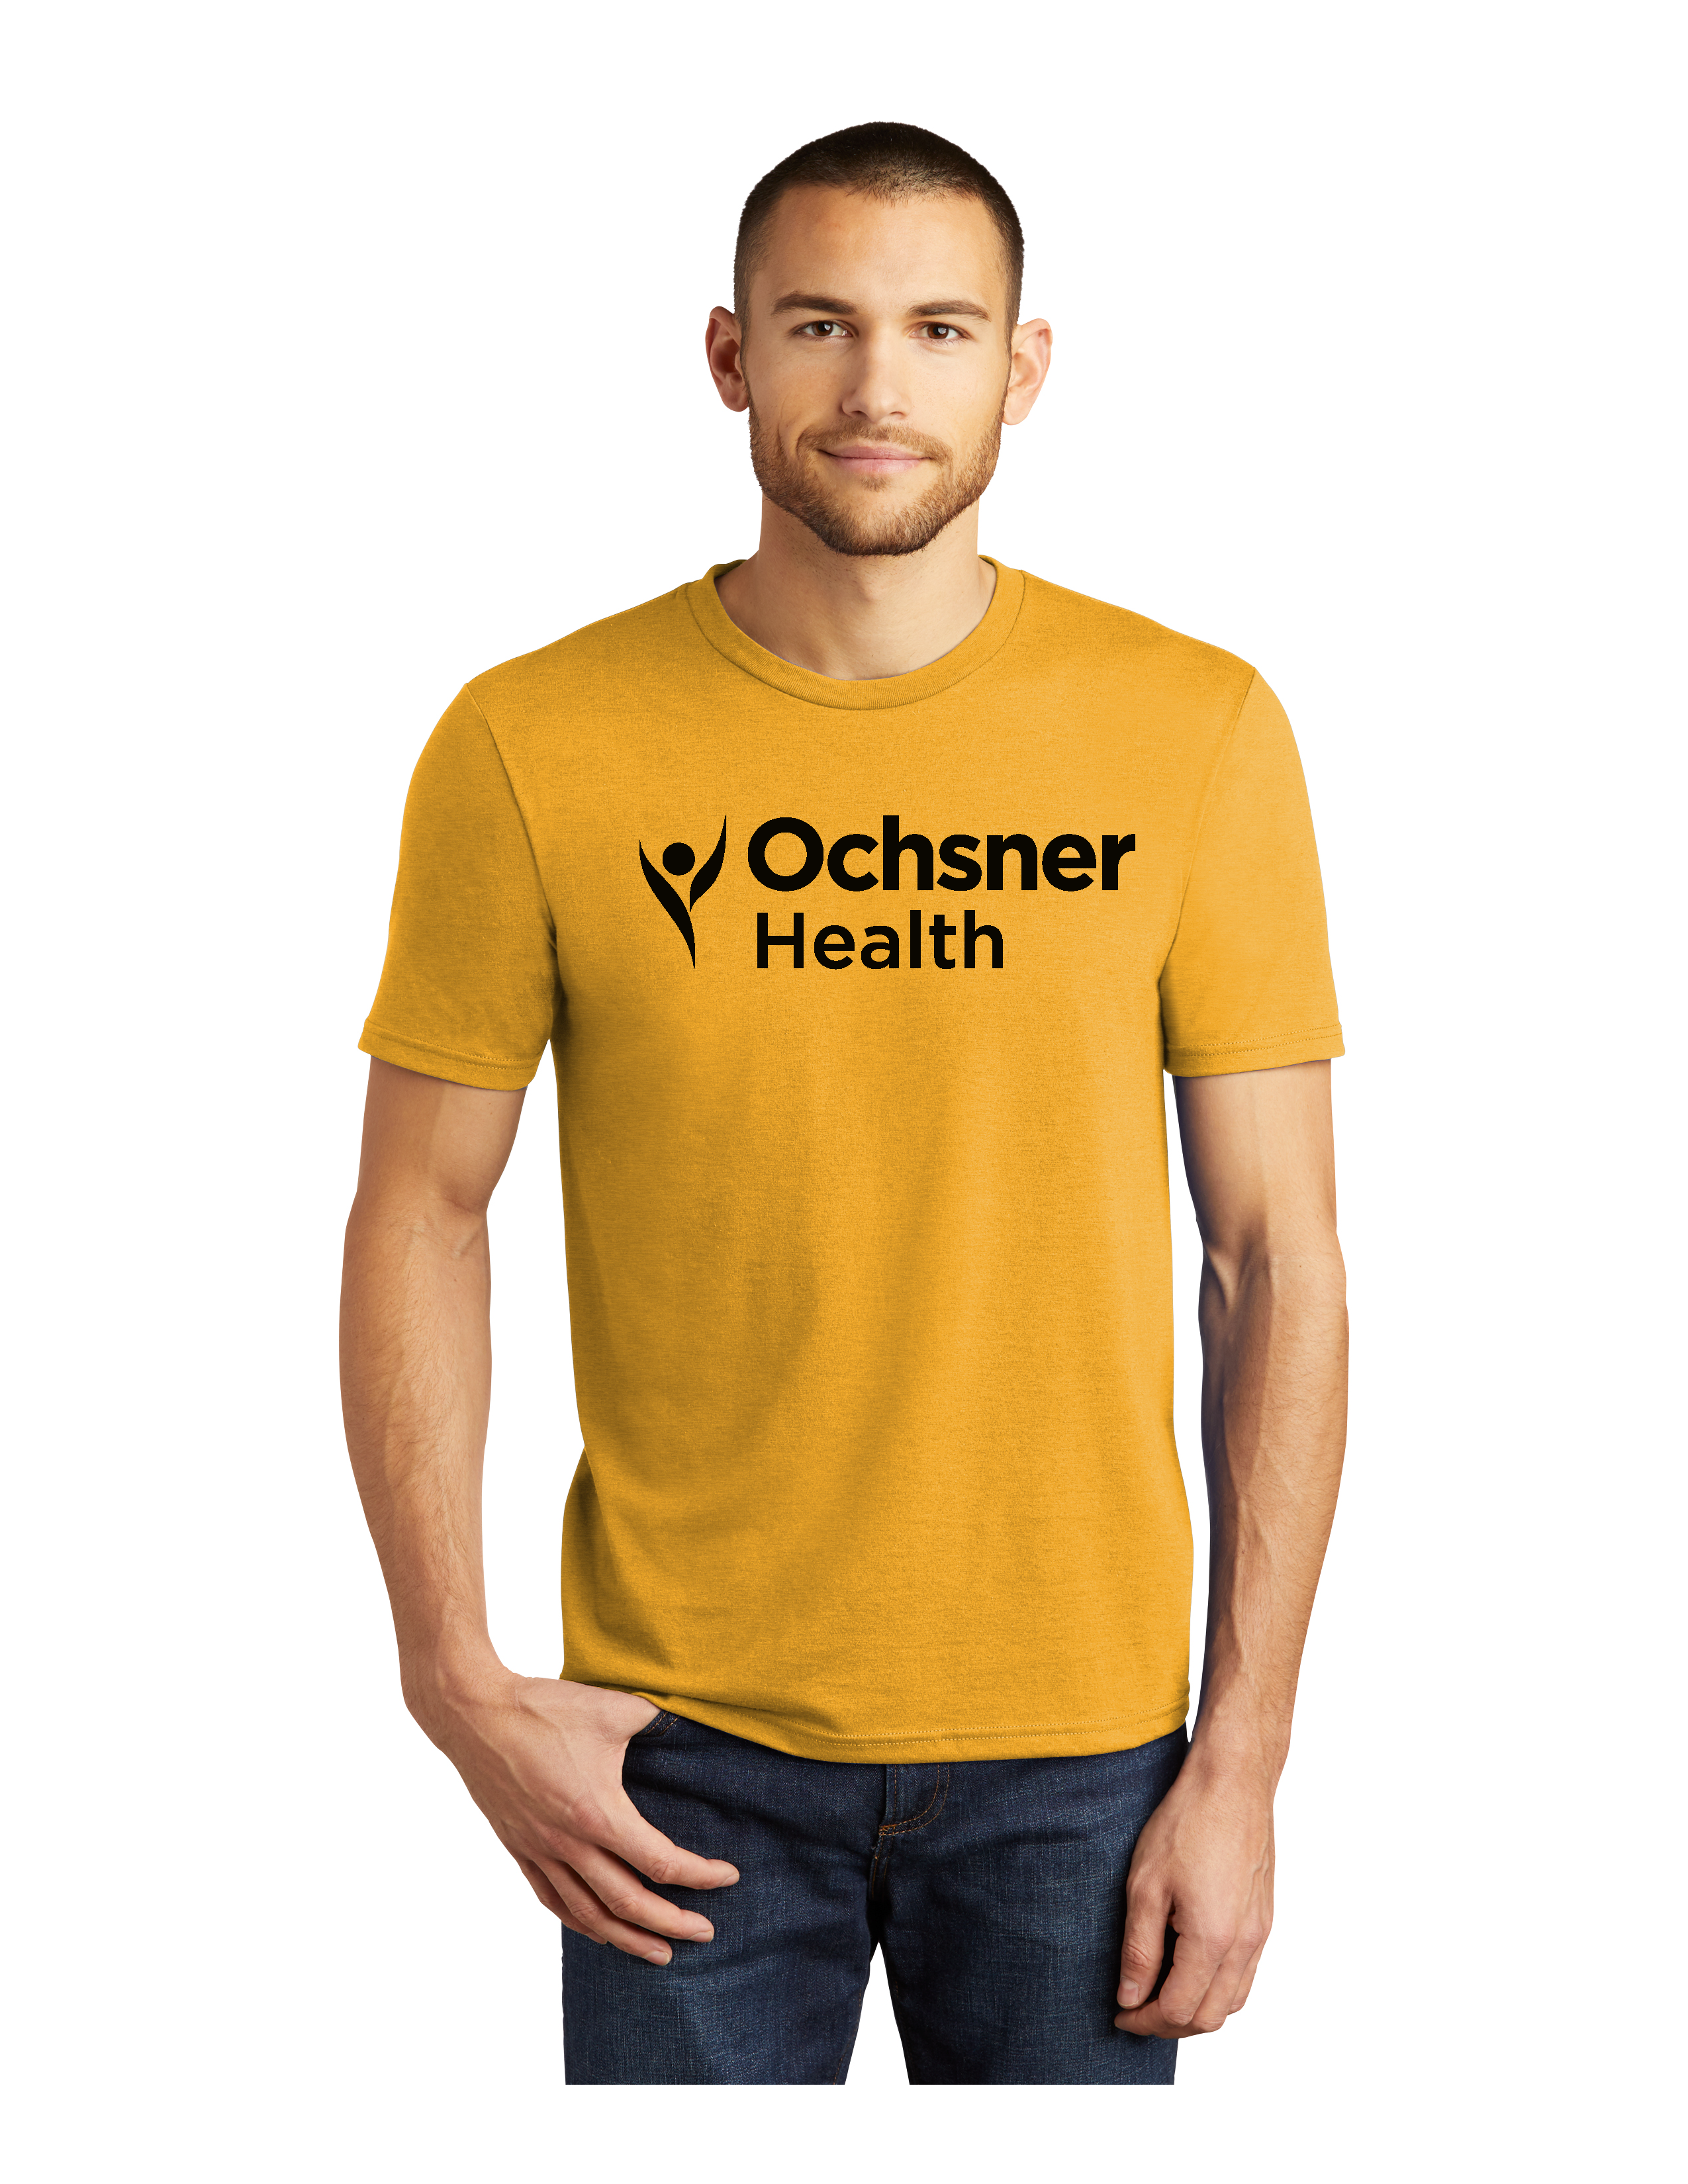 Ochsner Saints Unisex Short Sleeve T-Shirt, , large image number 2